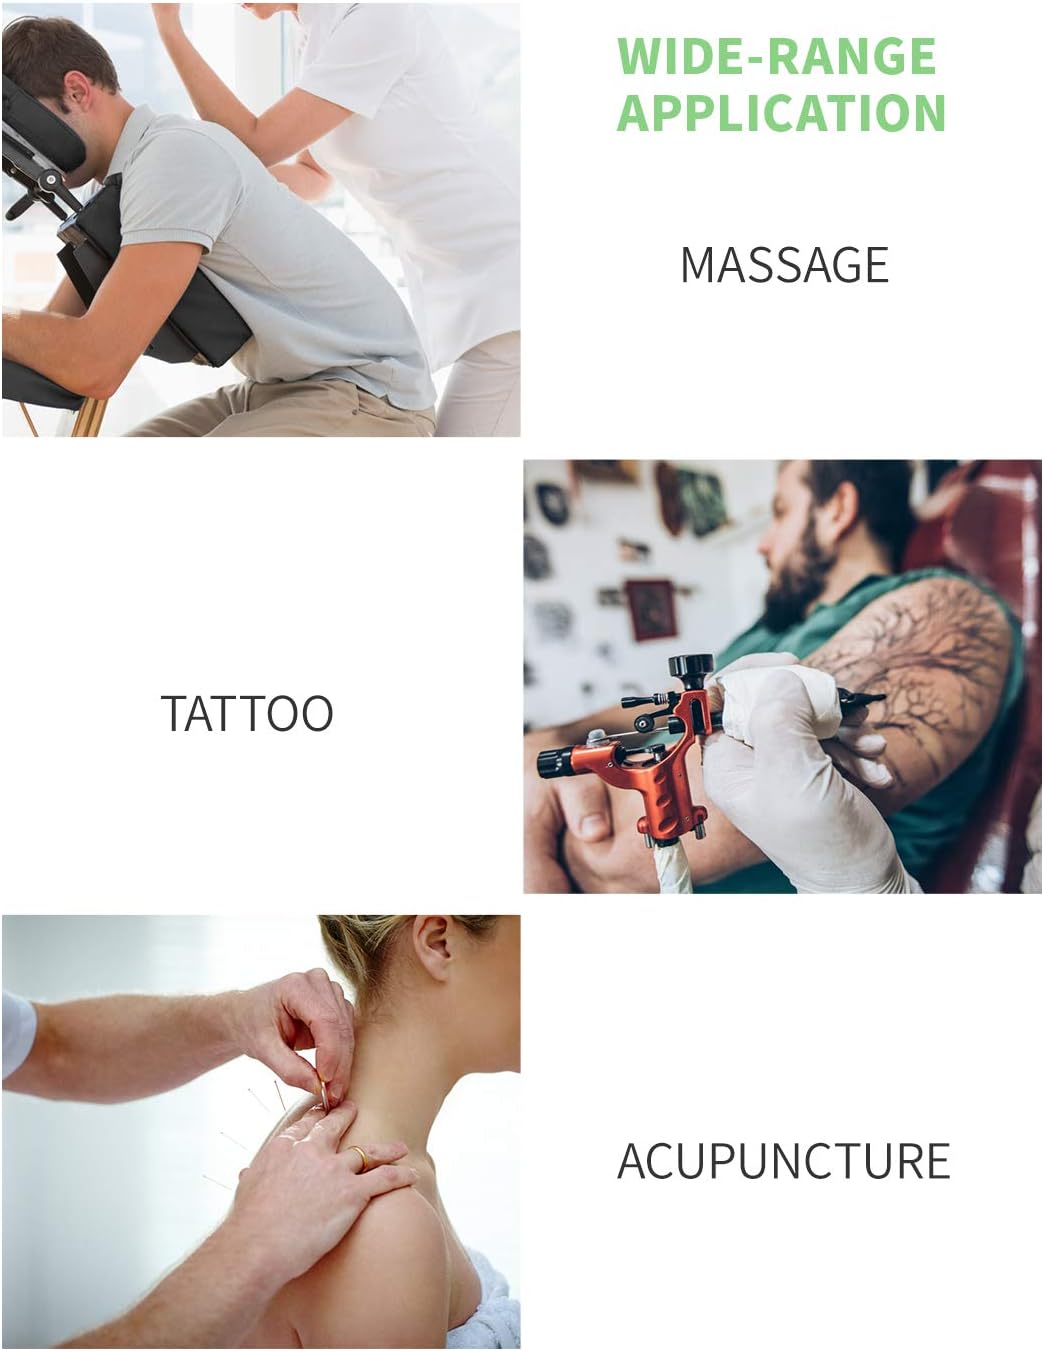 Silla de masaje portátil para tatuaje, silla plegable de altura ajustable,